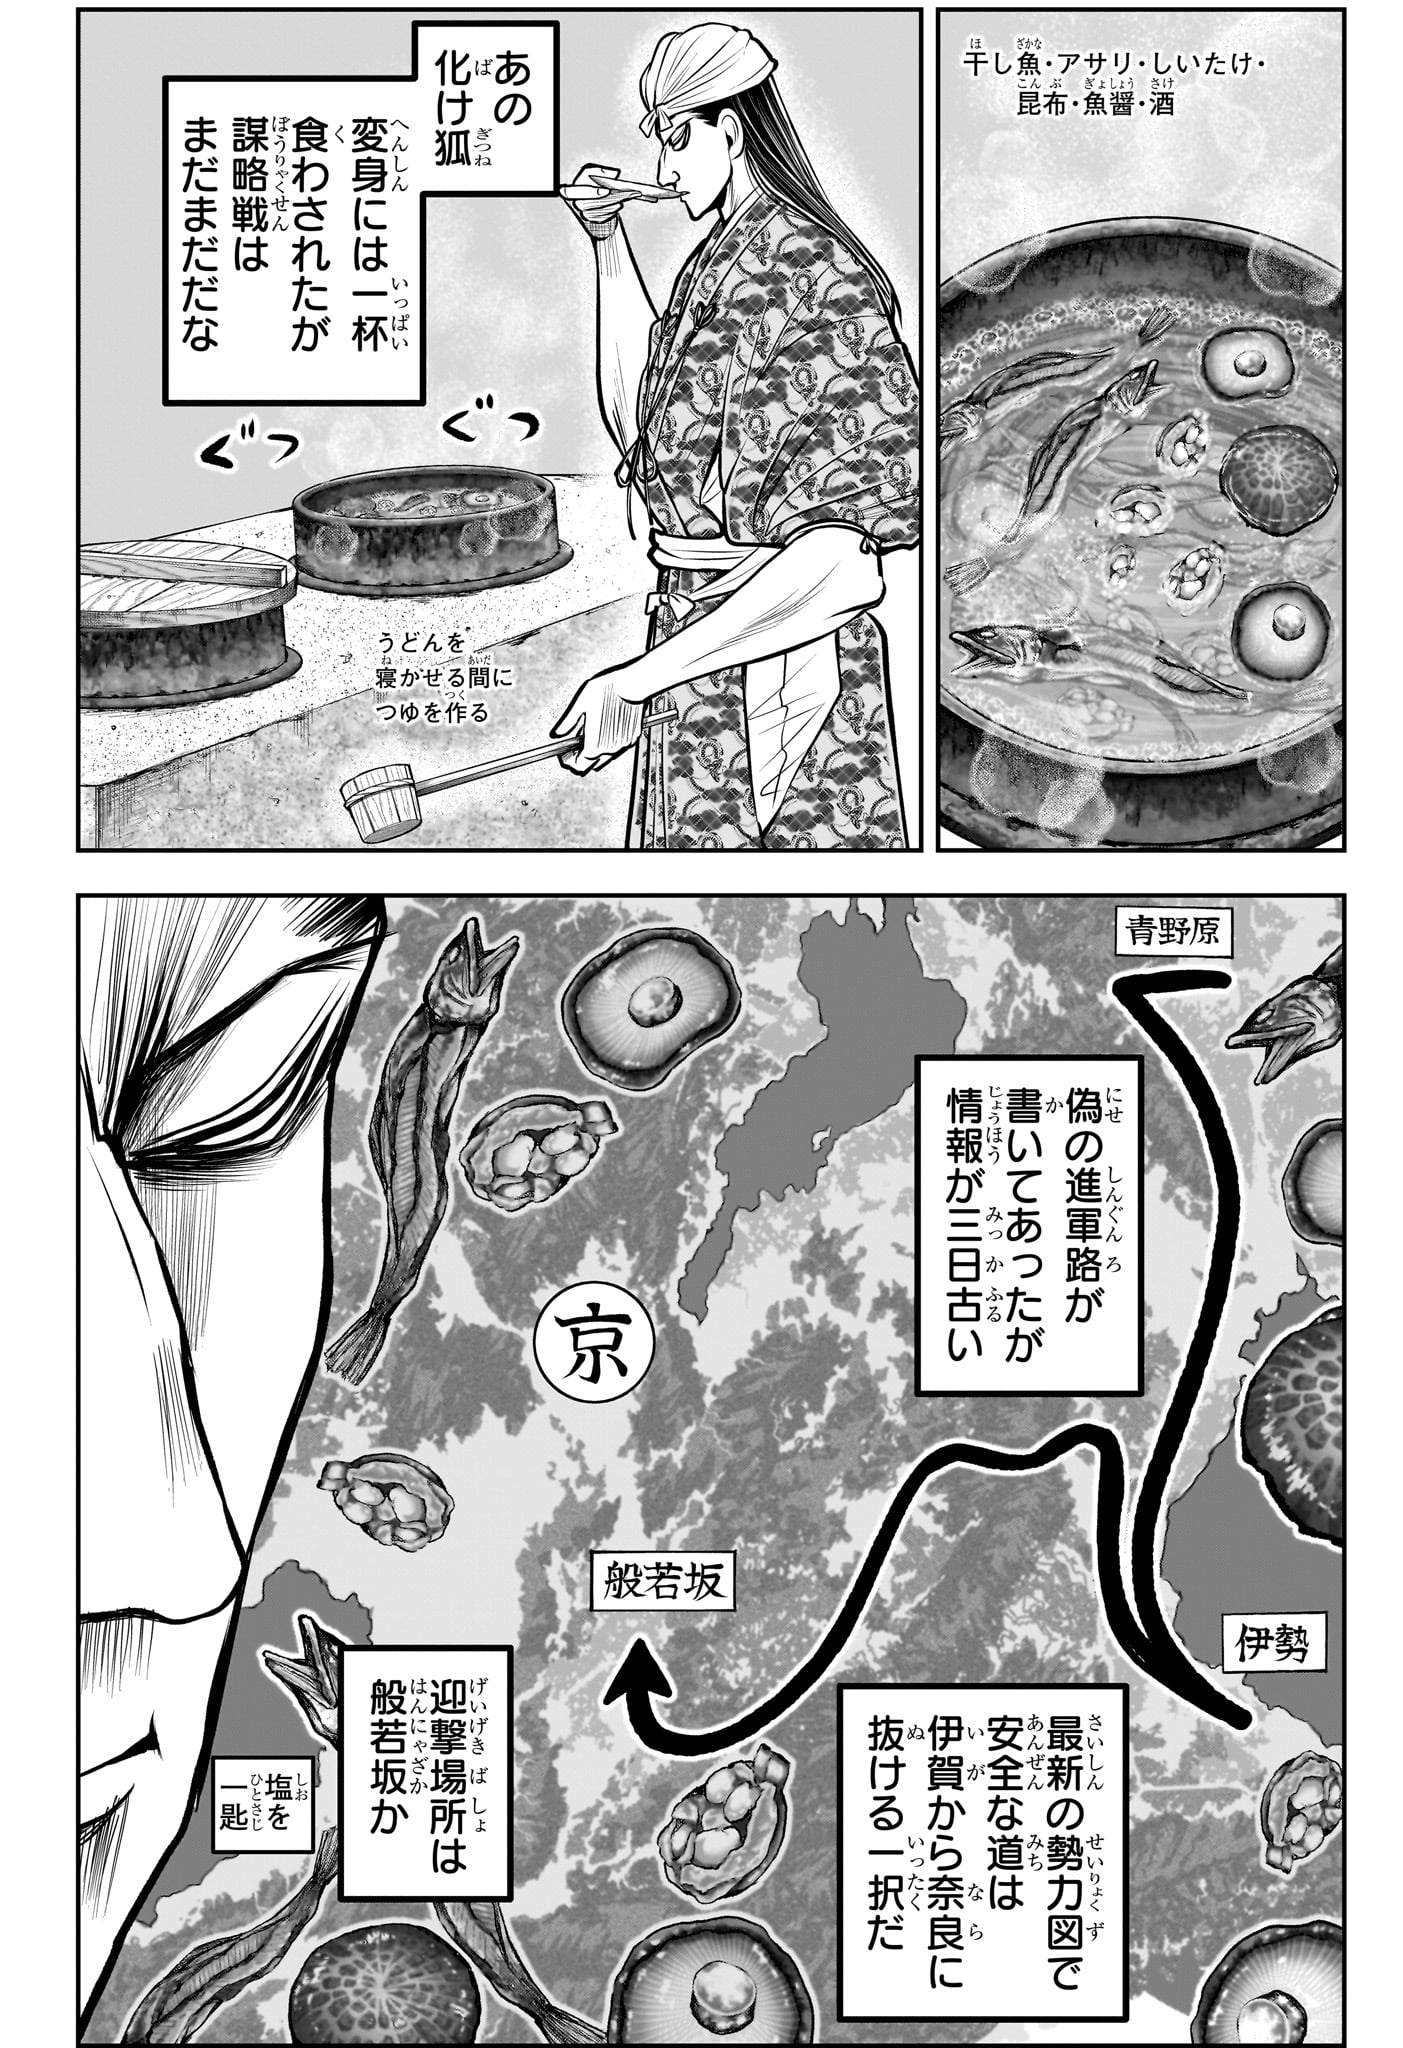 Nige Jouzu no Wakagimi - Chapter 150 - Page 4